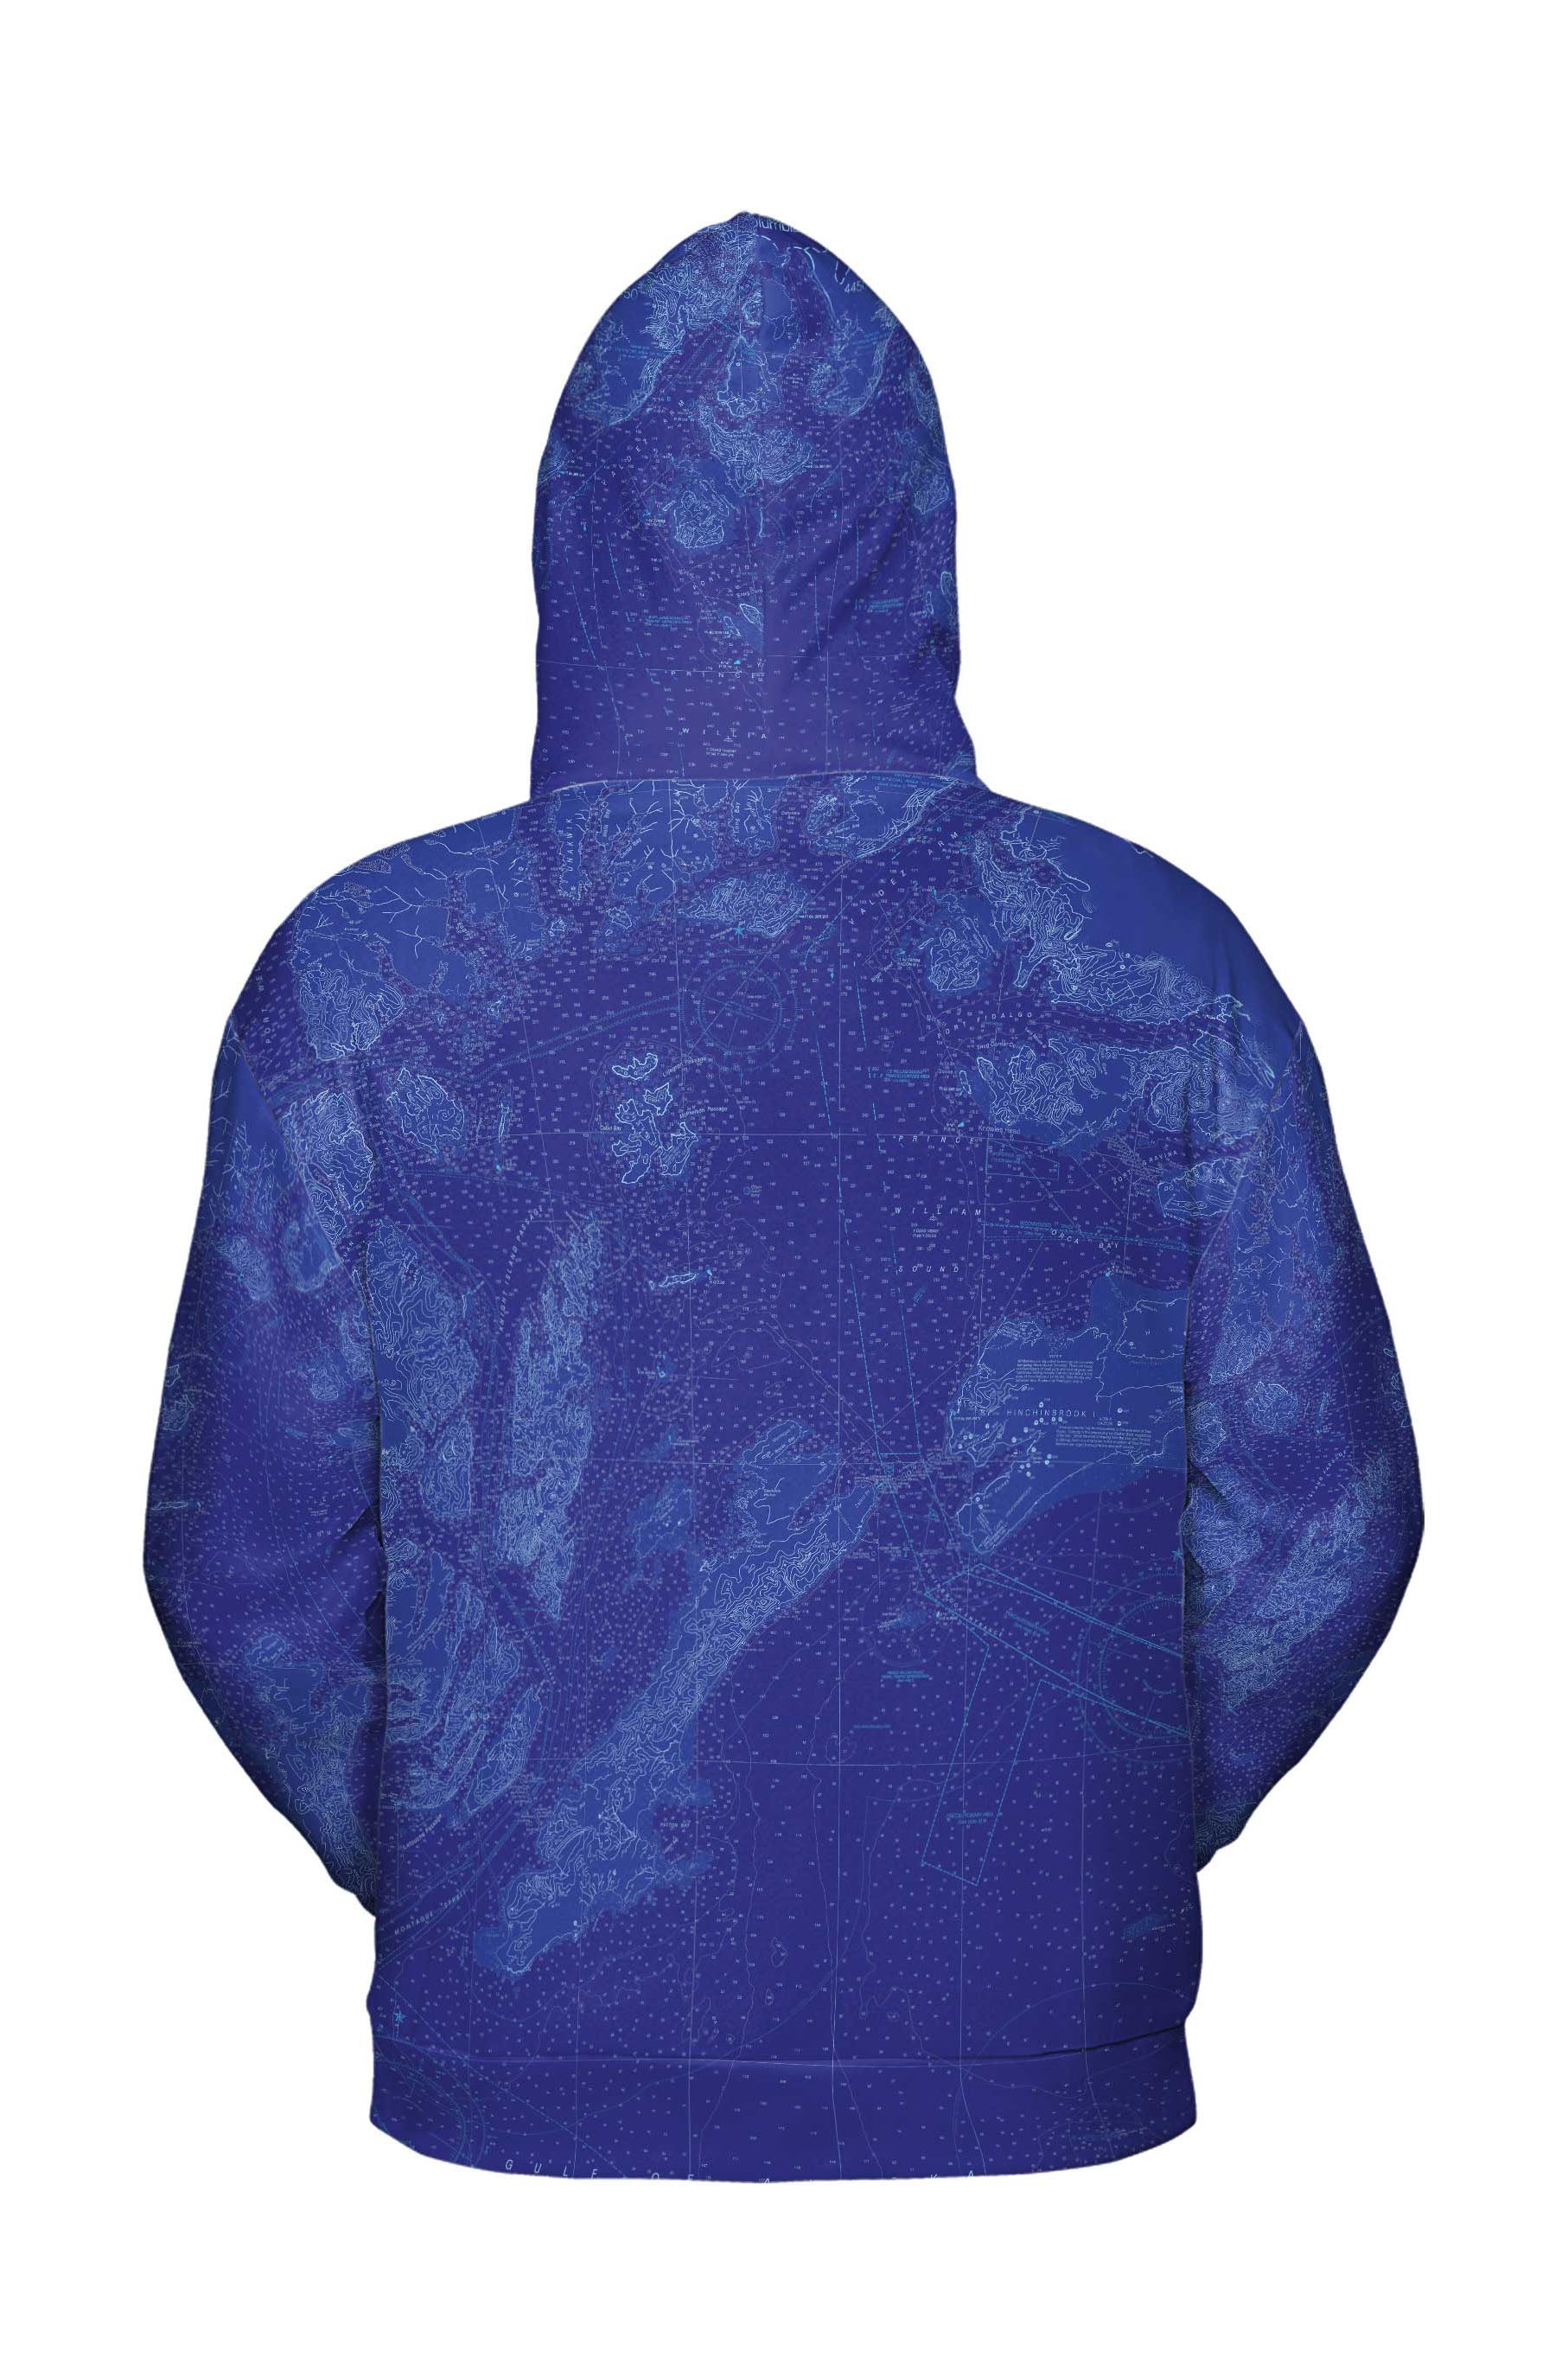 Alaska Prince William Sound blue hoodie back